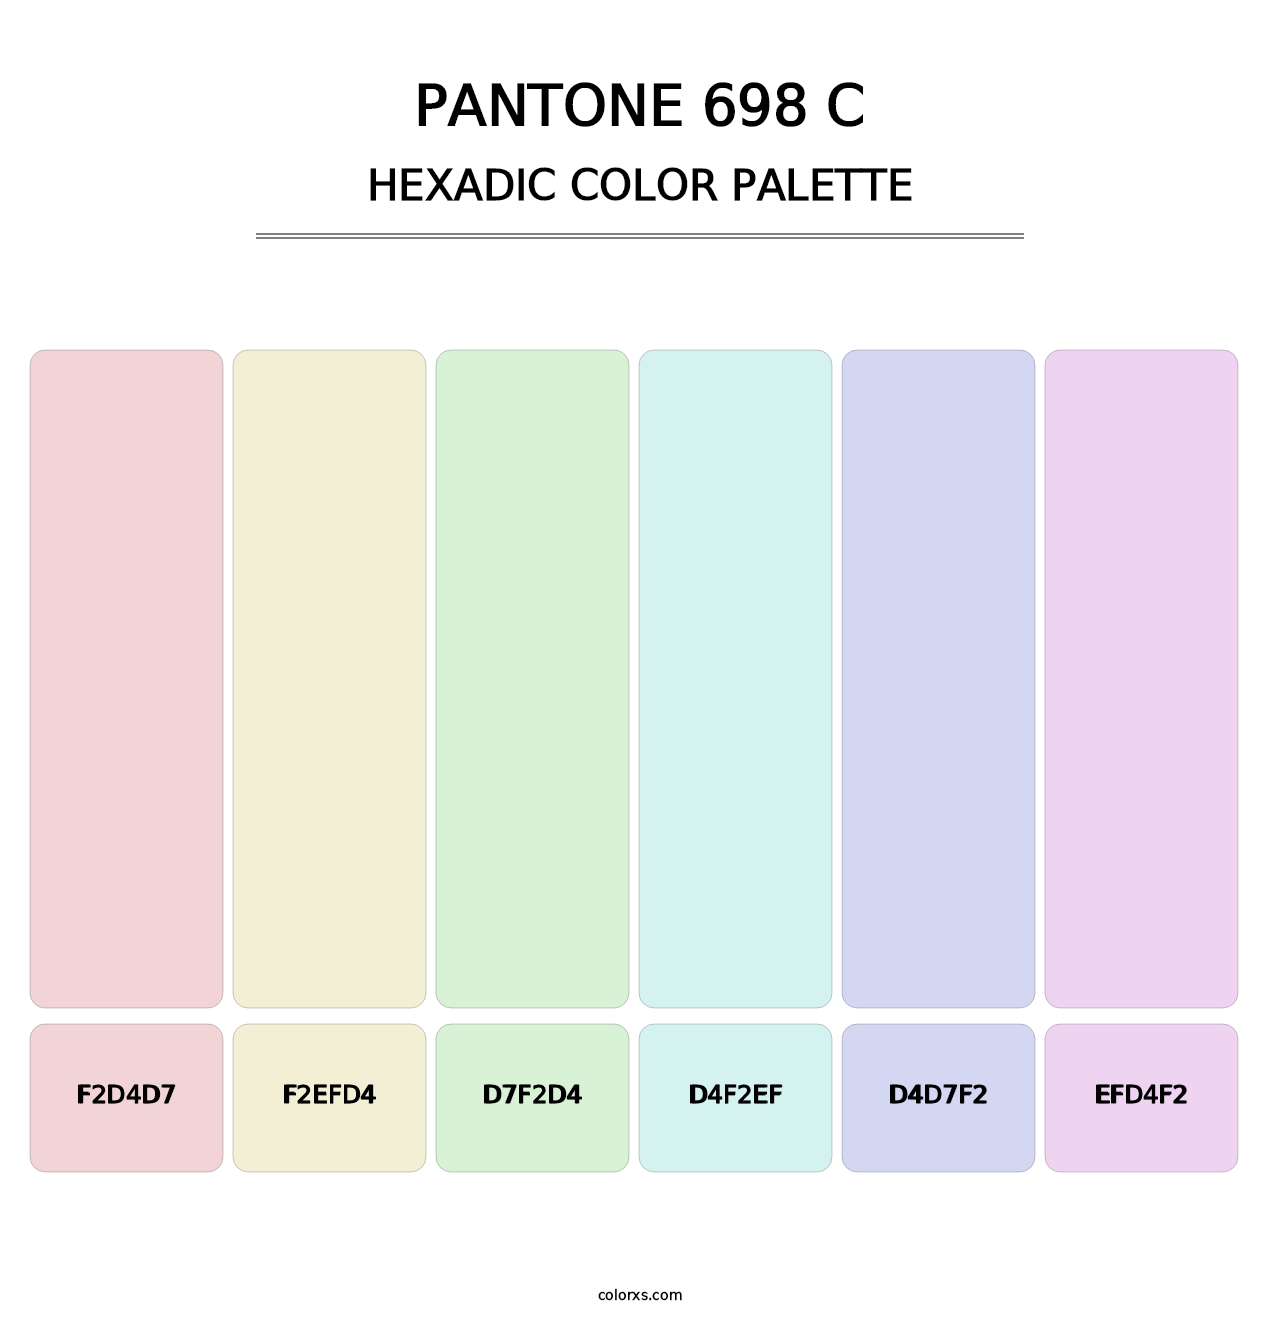 PANTONE 698 C - Hexadic Color Palette